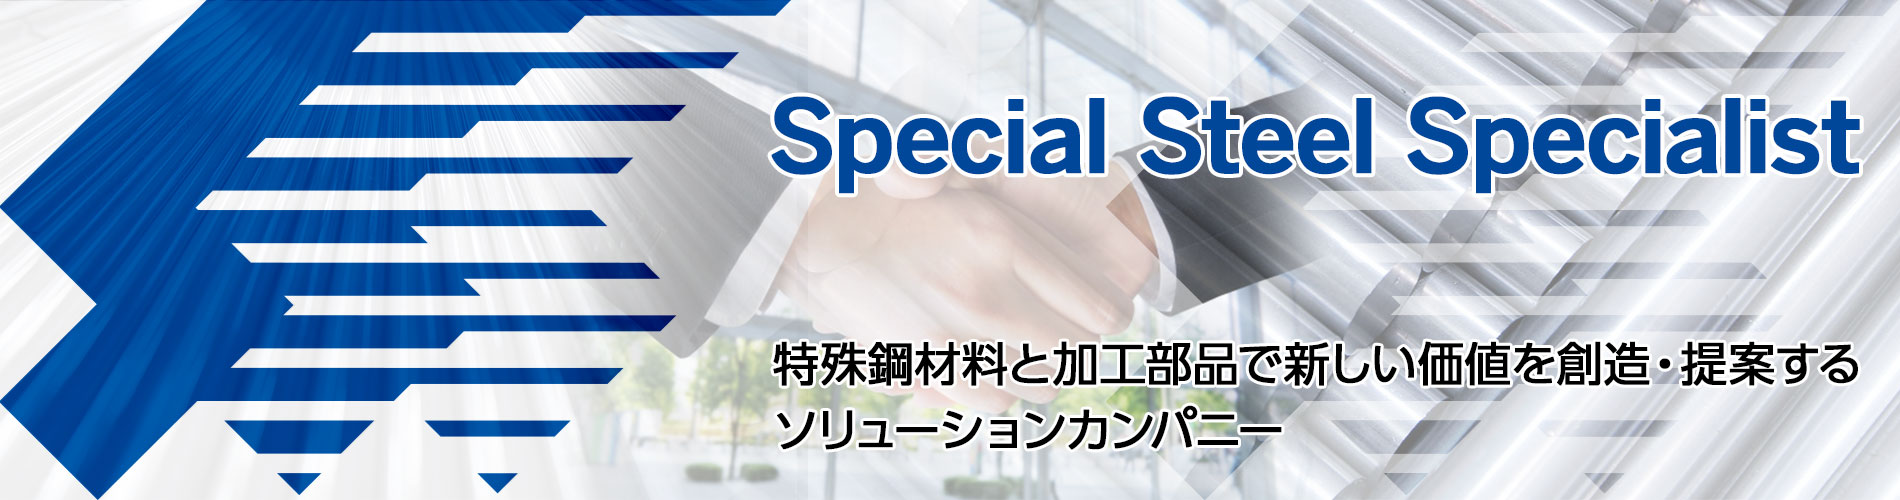 Special Steel Specialist